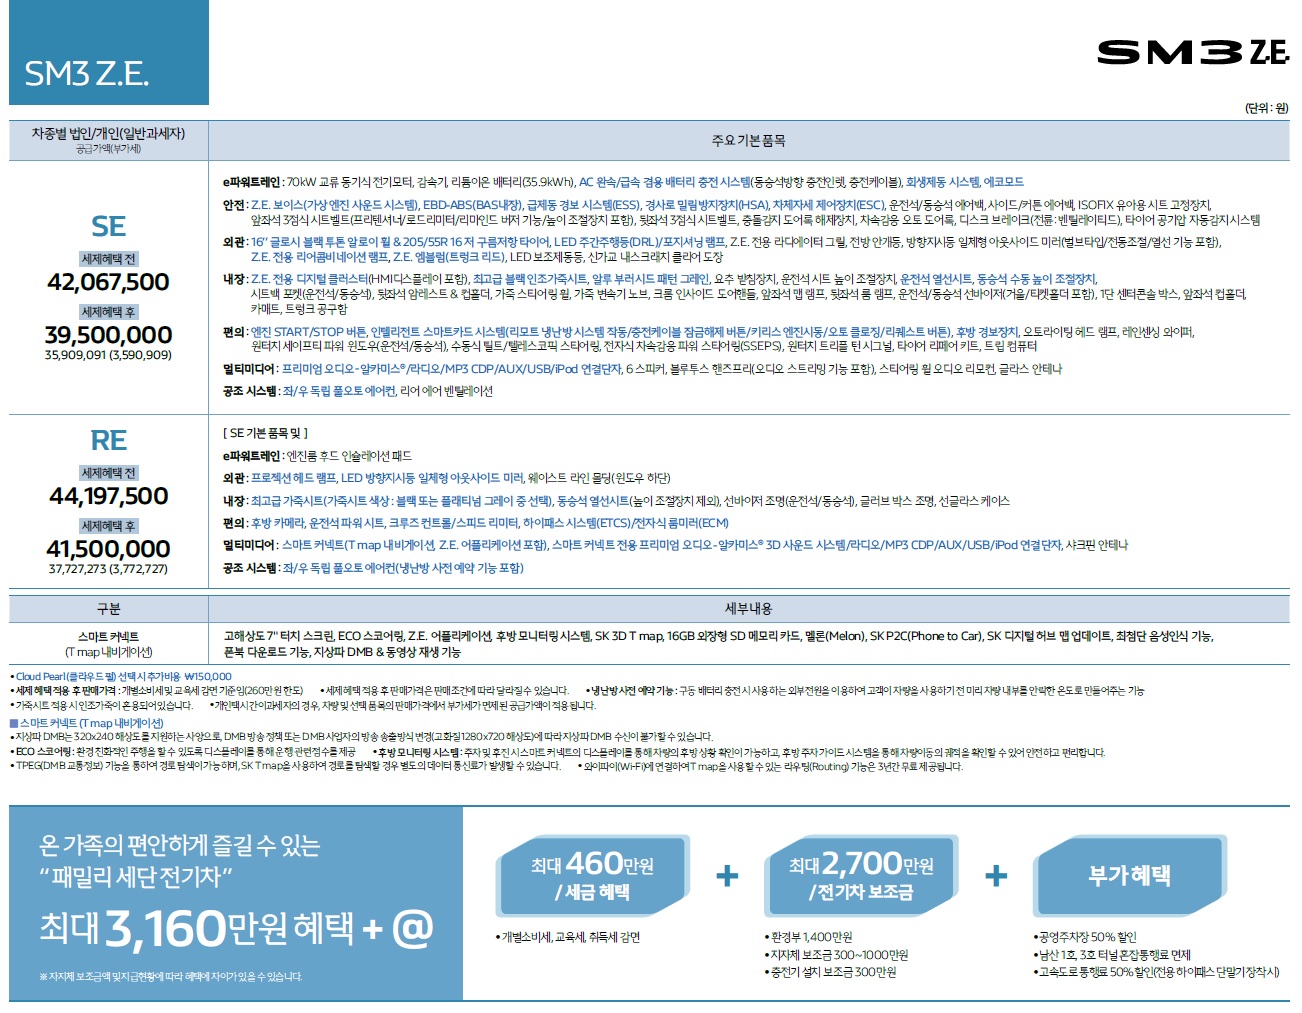 SM3 ZE 가격표 - 2017년 11월 -1.jpg